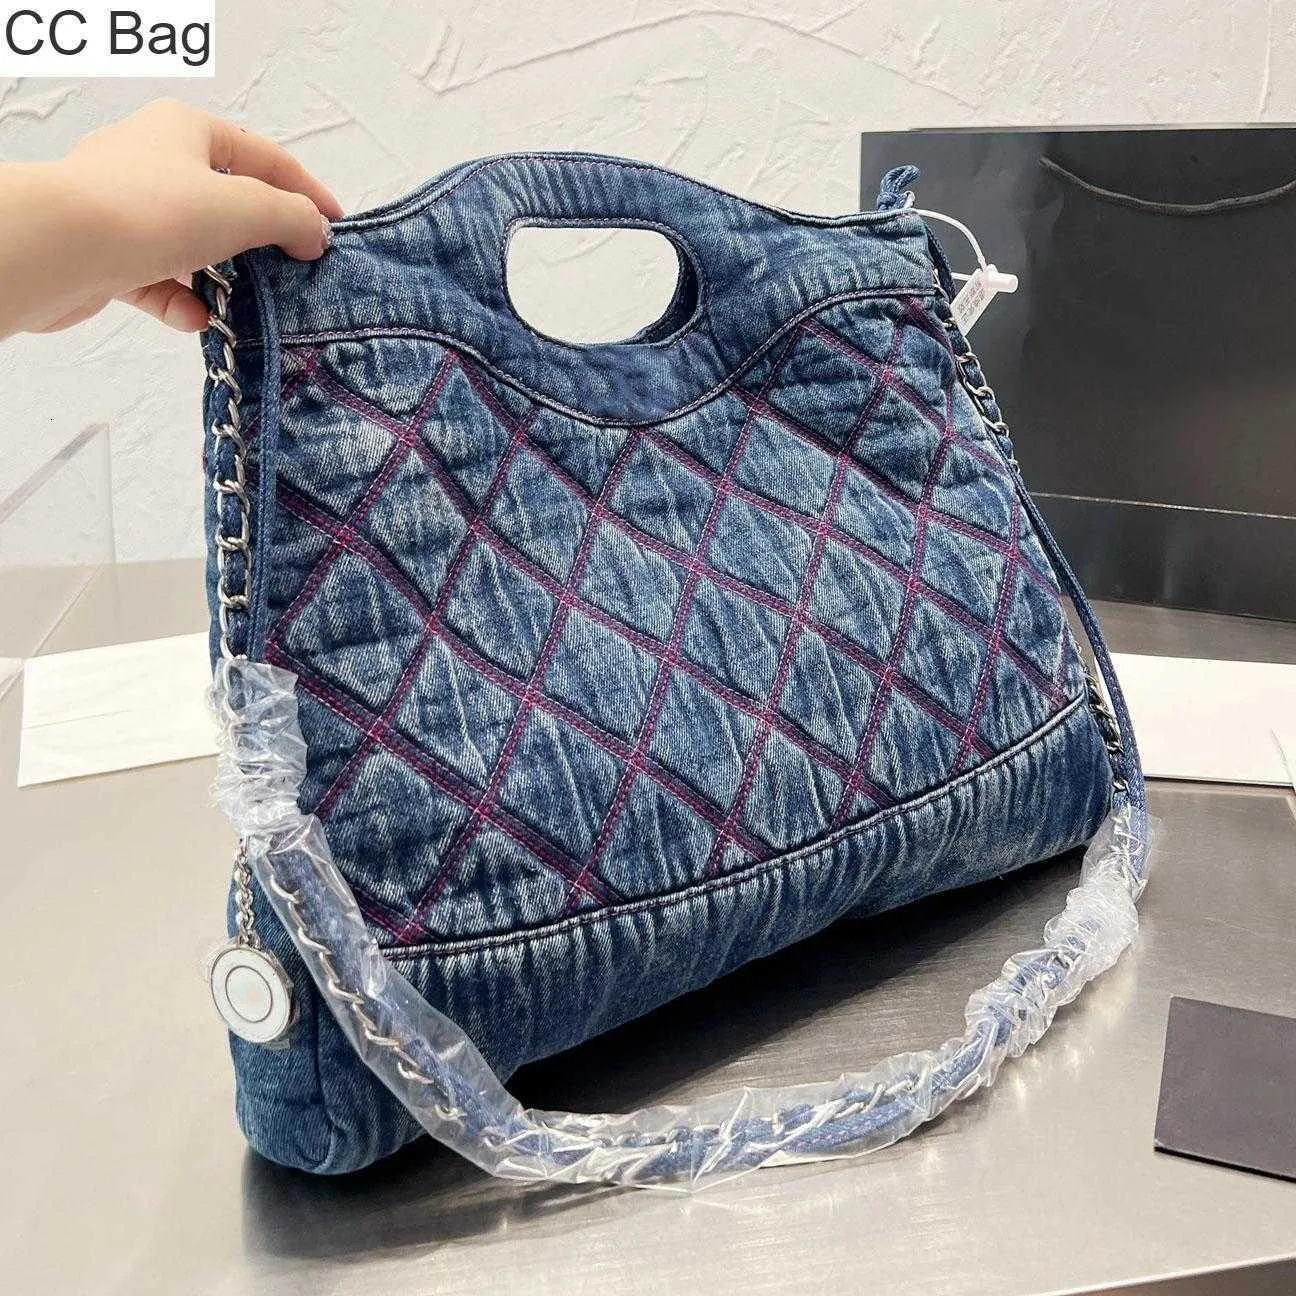 10A CC Bag Womens Denim Shopping Bag Bleu et Noir Brodé Distressed Designer Bag Quilted Plaid Silver Metal Chain Grande Capacité Totes Purses Luxury Handbags